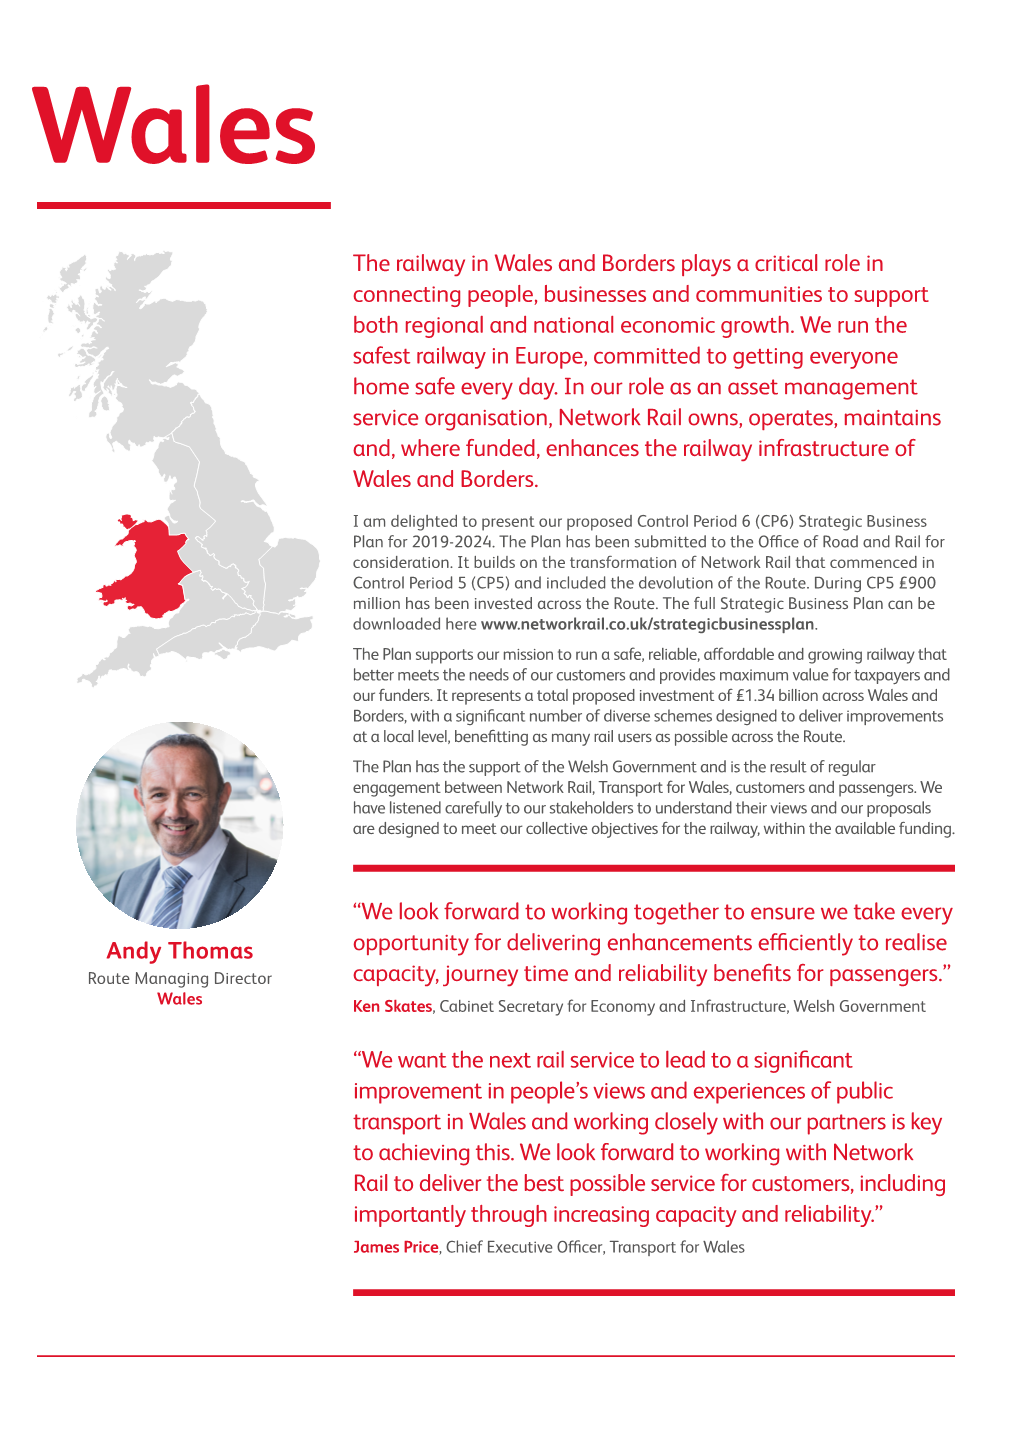 Strategic Business Plan 2019-2024 Summary Wales